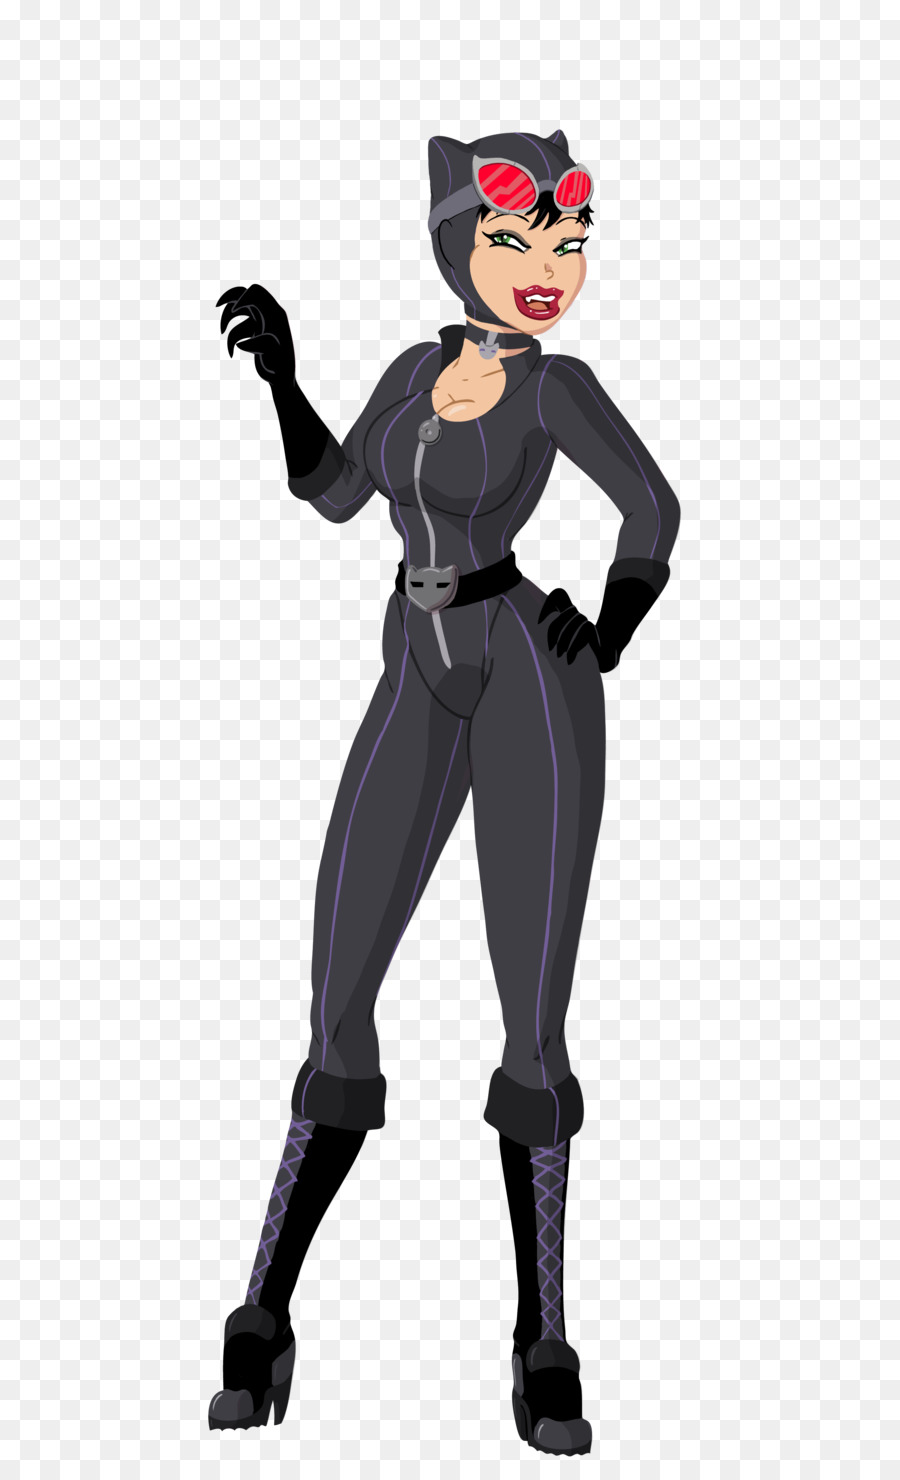 Catwoman Batman: Arkham City Joker Bane - Catwoman PNG File png download - 900*1463 - Free Transparent Batman Arkham City png Download.